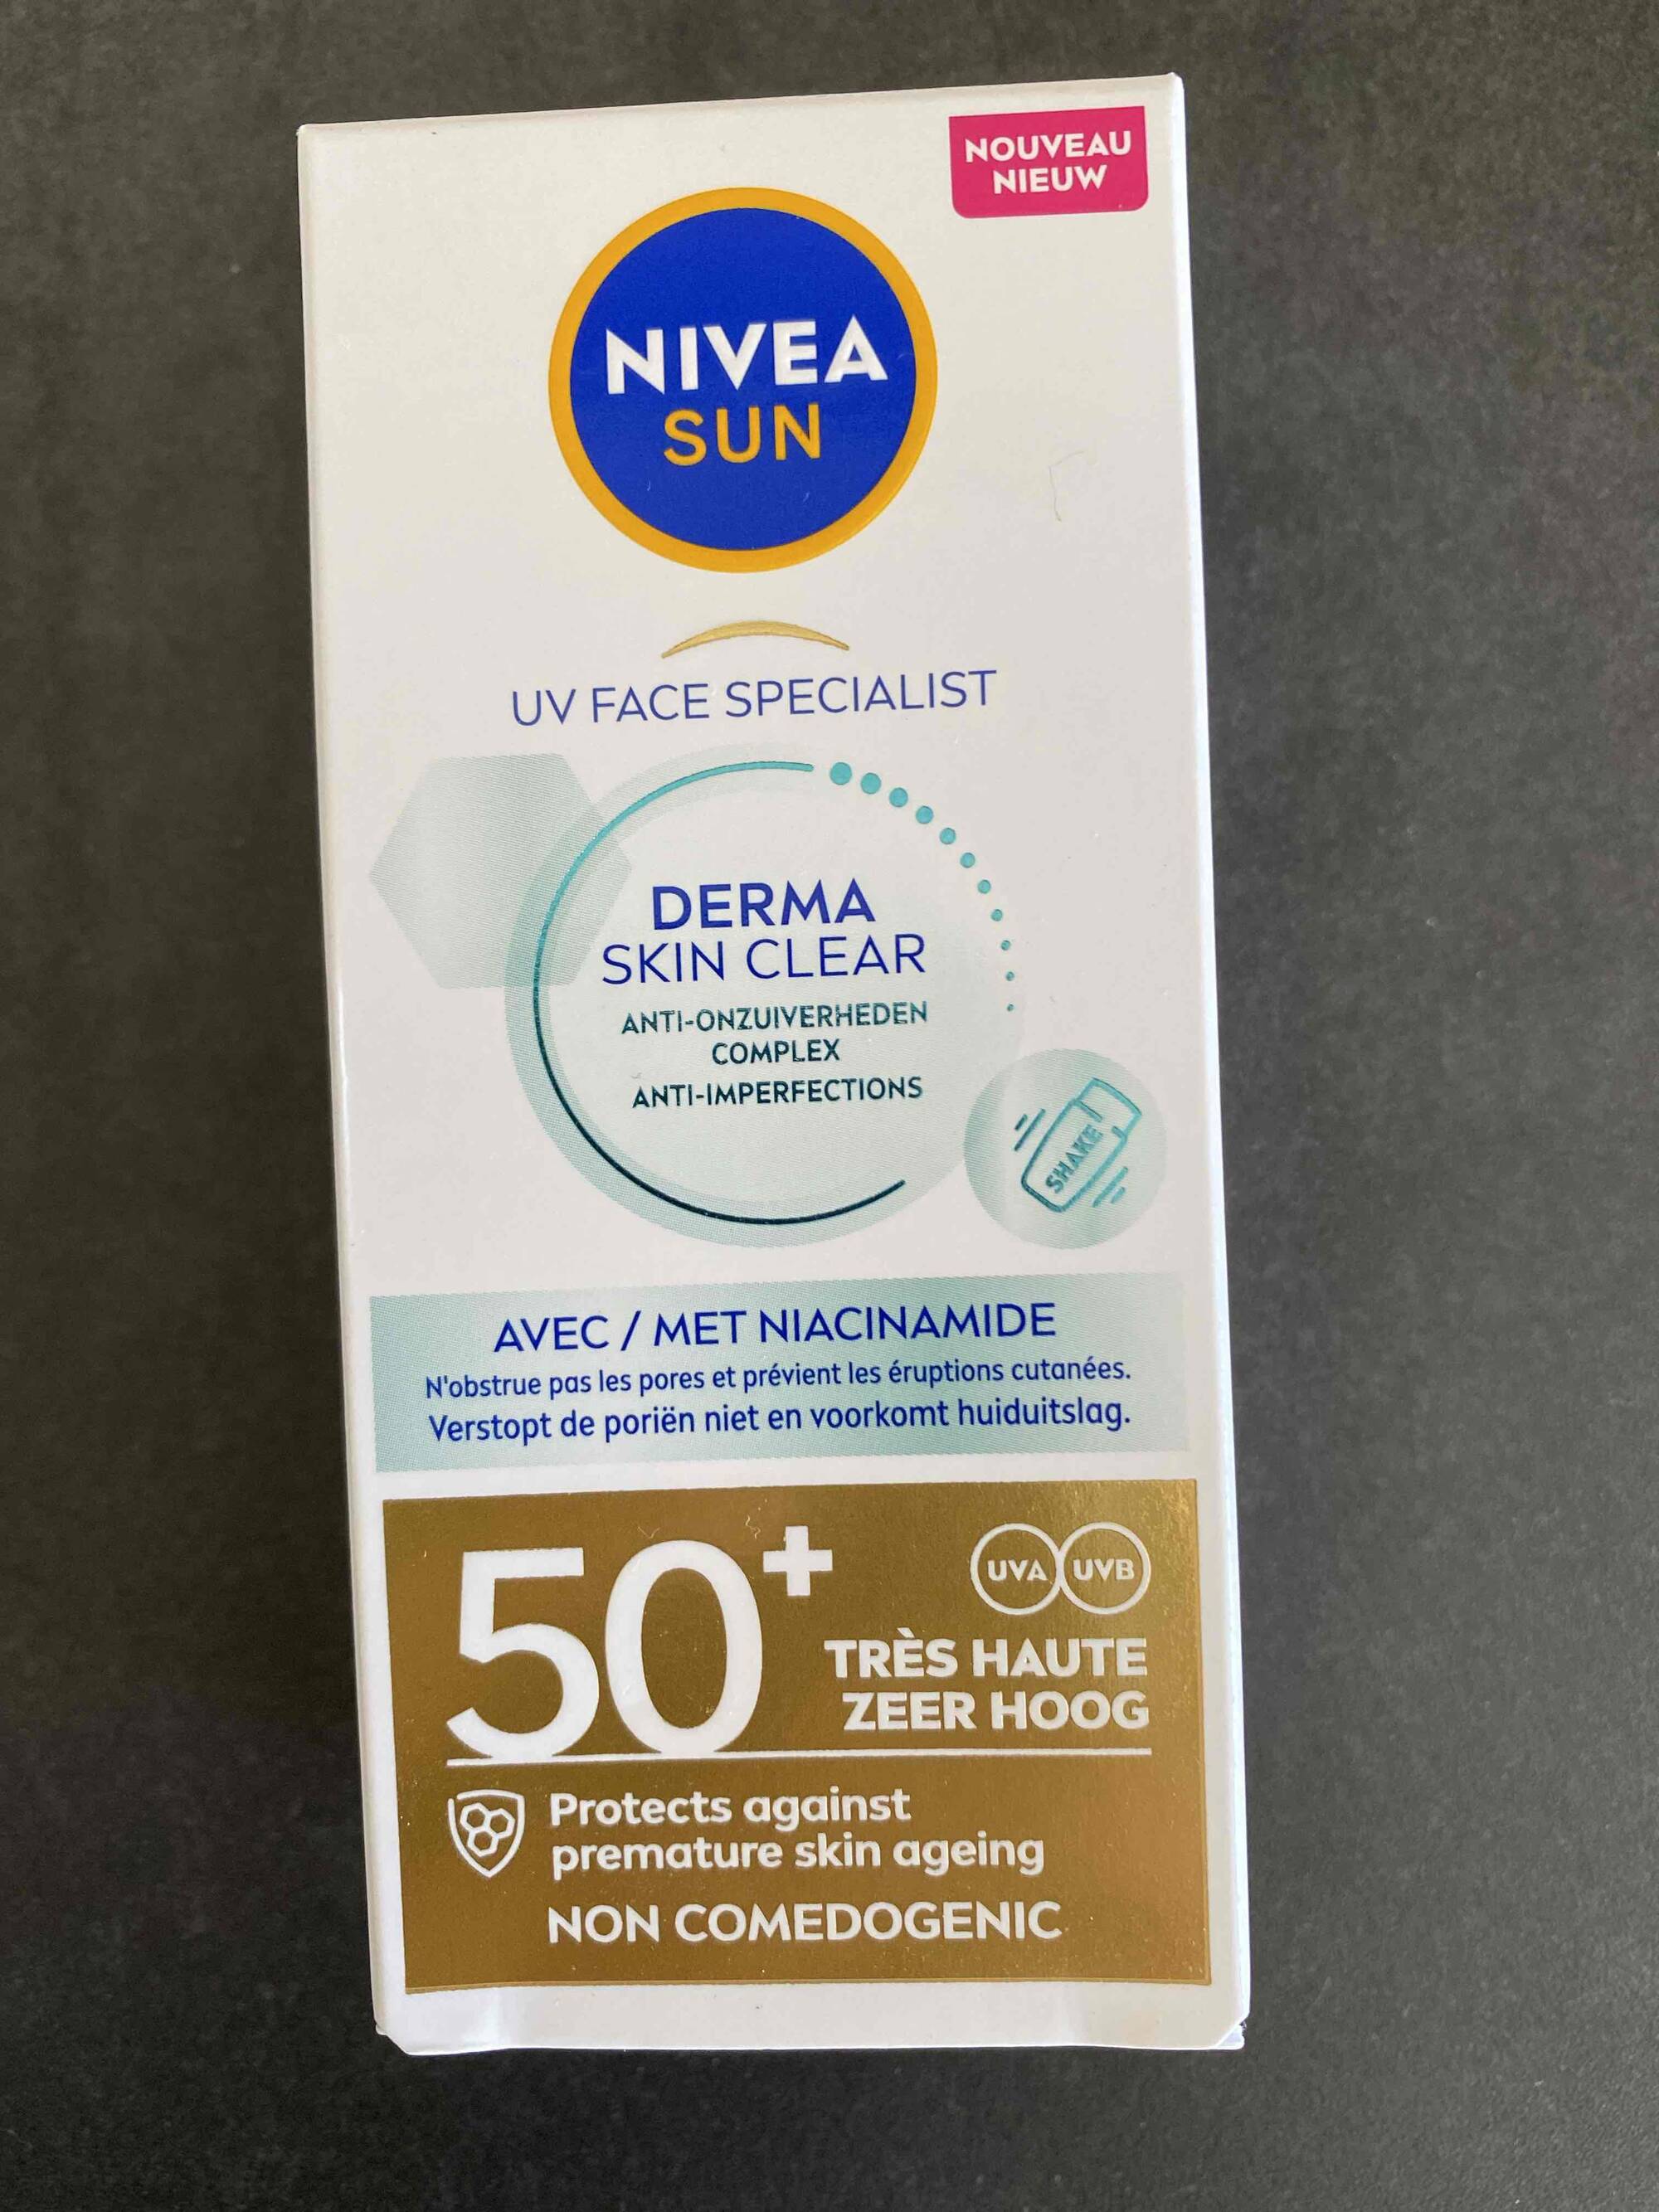 NIVEA SUN - Derma skin clear - Anti-imperfections 50+